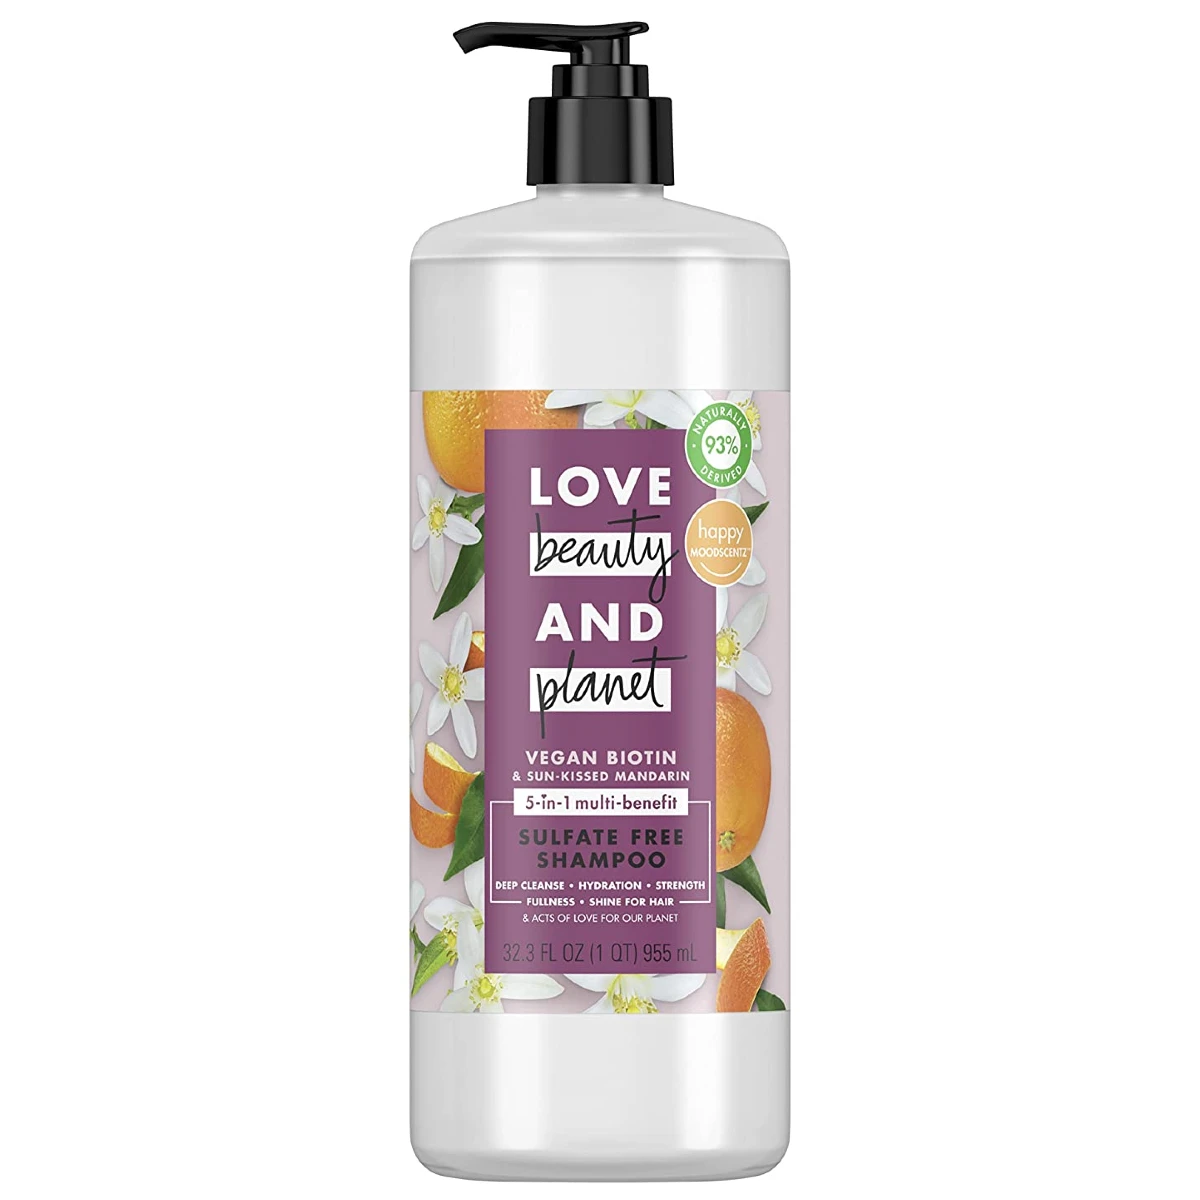 Love Beauty And Planet Sulfate Free Deep Cleanse Volumize Shine Vegan Biotin Sun Kissed Mandarin 5 in 1 Multi Benefit Nourishing Shampoo